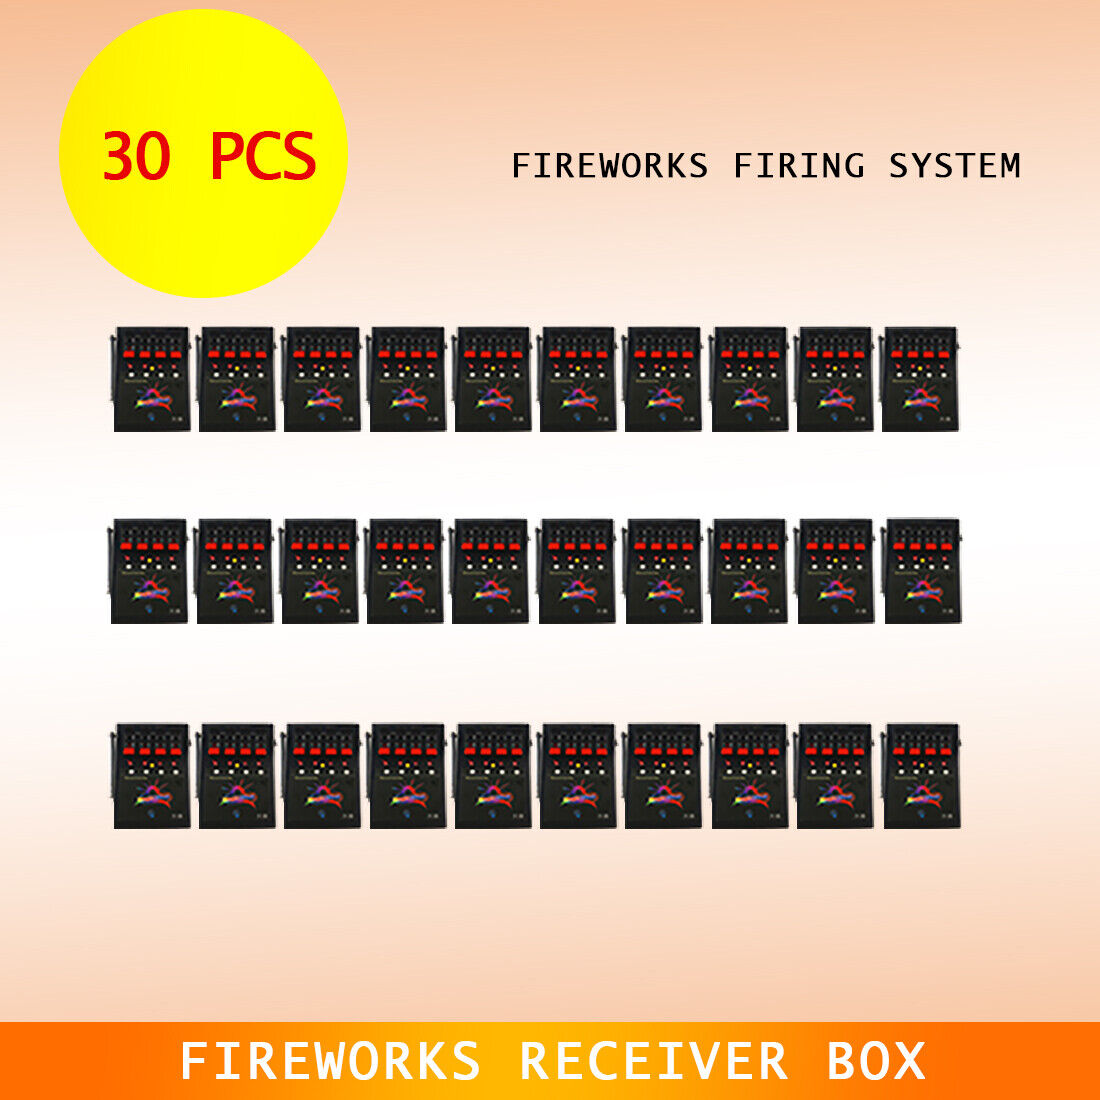 Bilusocn 433MHZ 30 PCS 4 cues receiver box for fireworks firing system